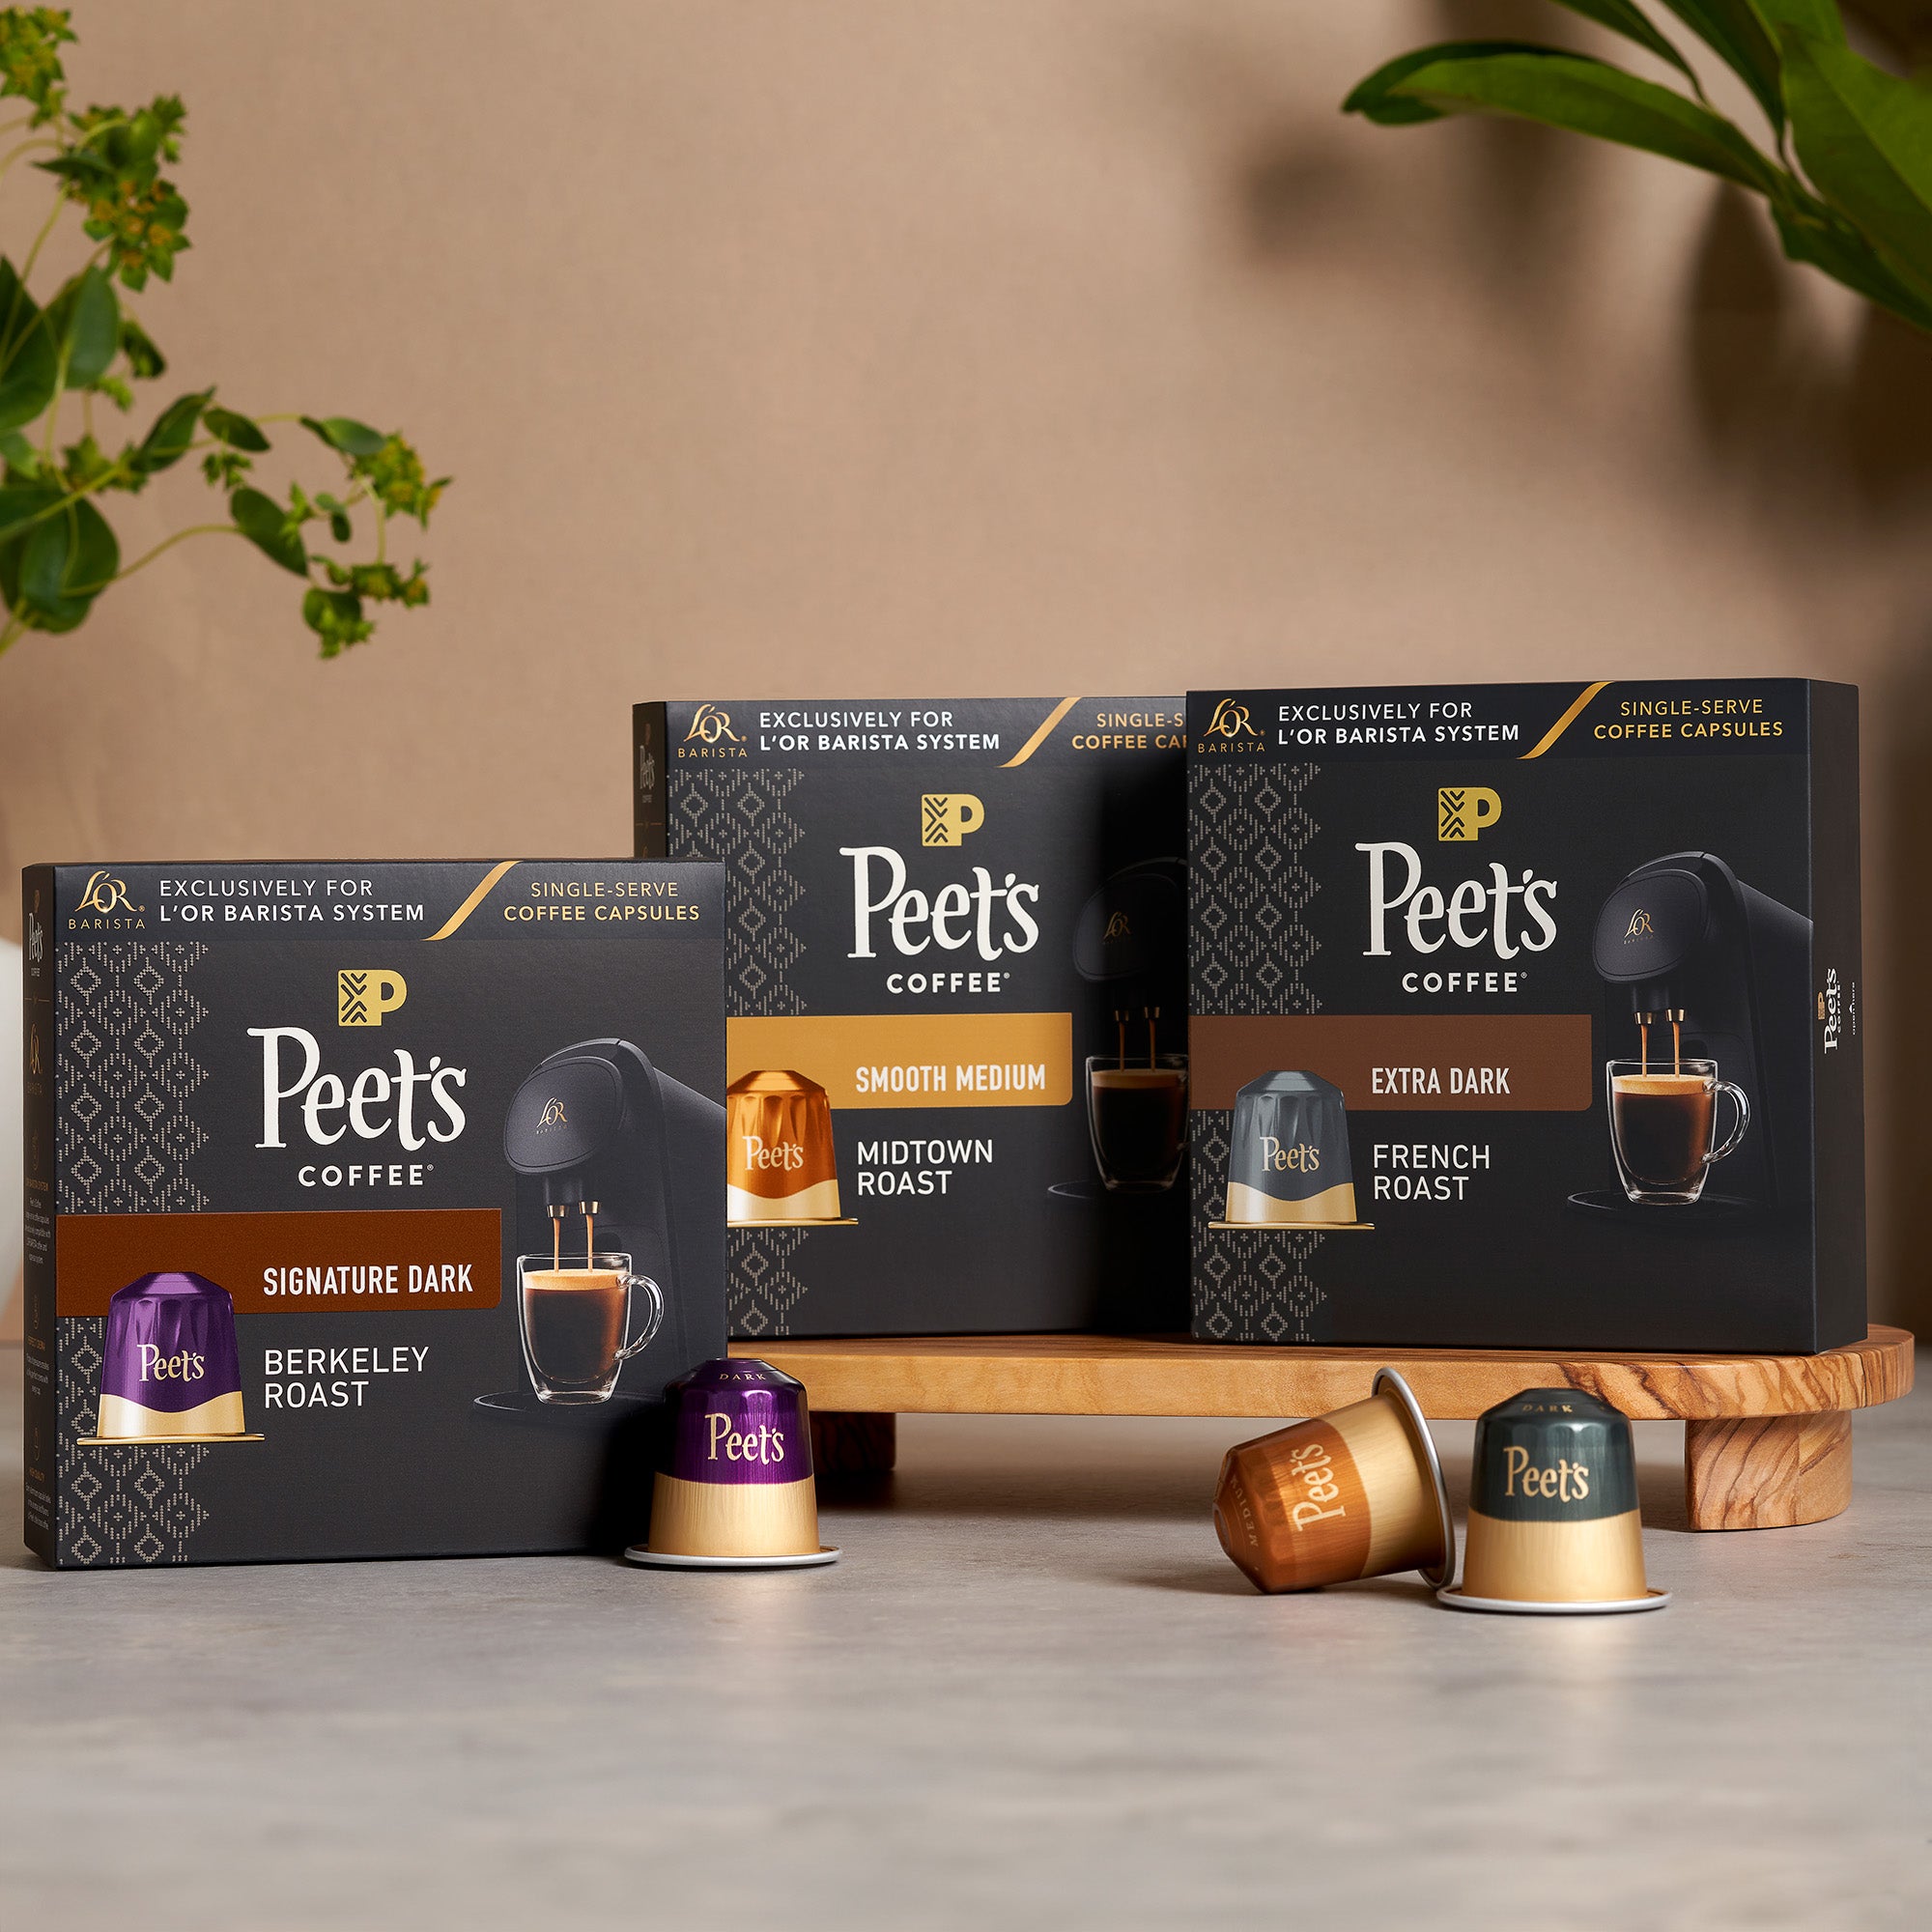 Image of Peet's coffee boxes.